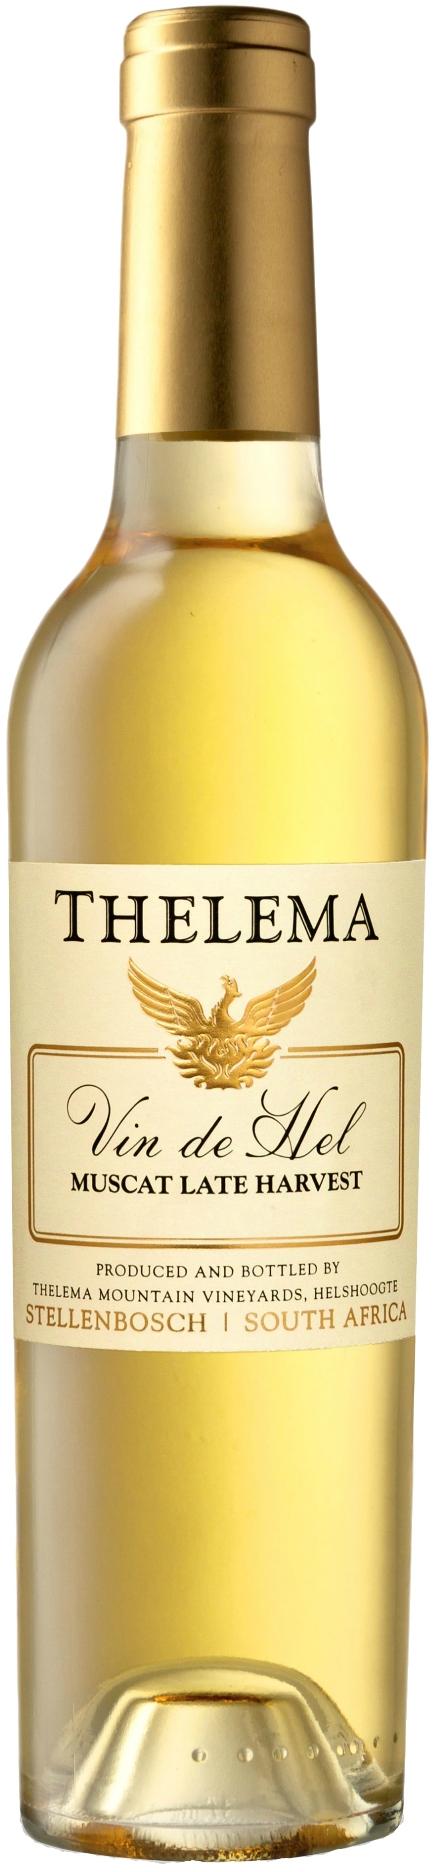 Thelema "Vin de Hel" Muscat late Harvest 2021